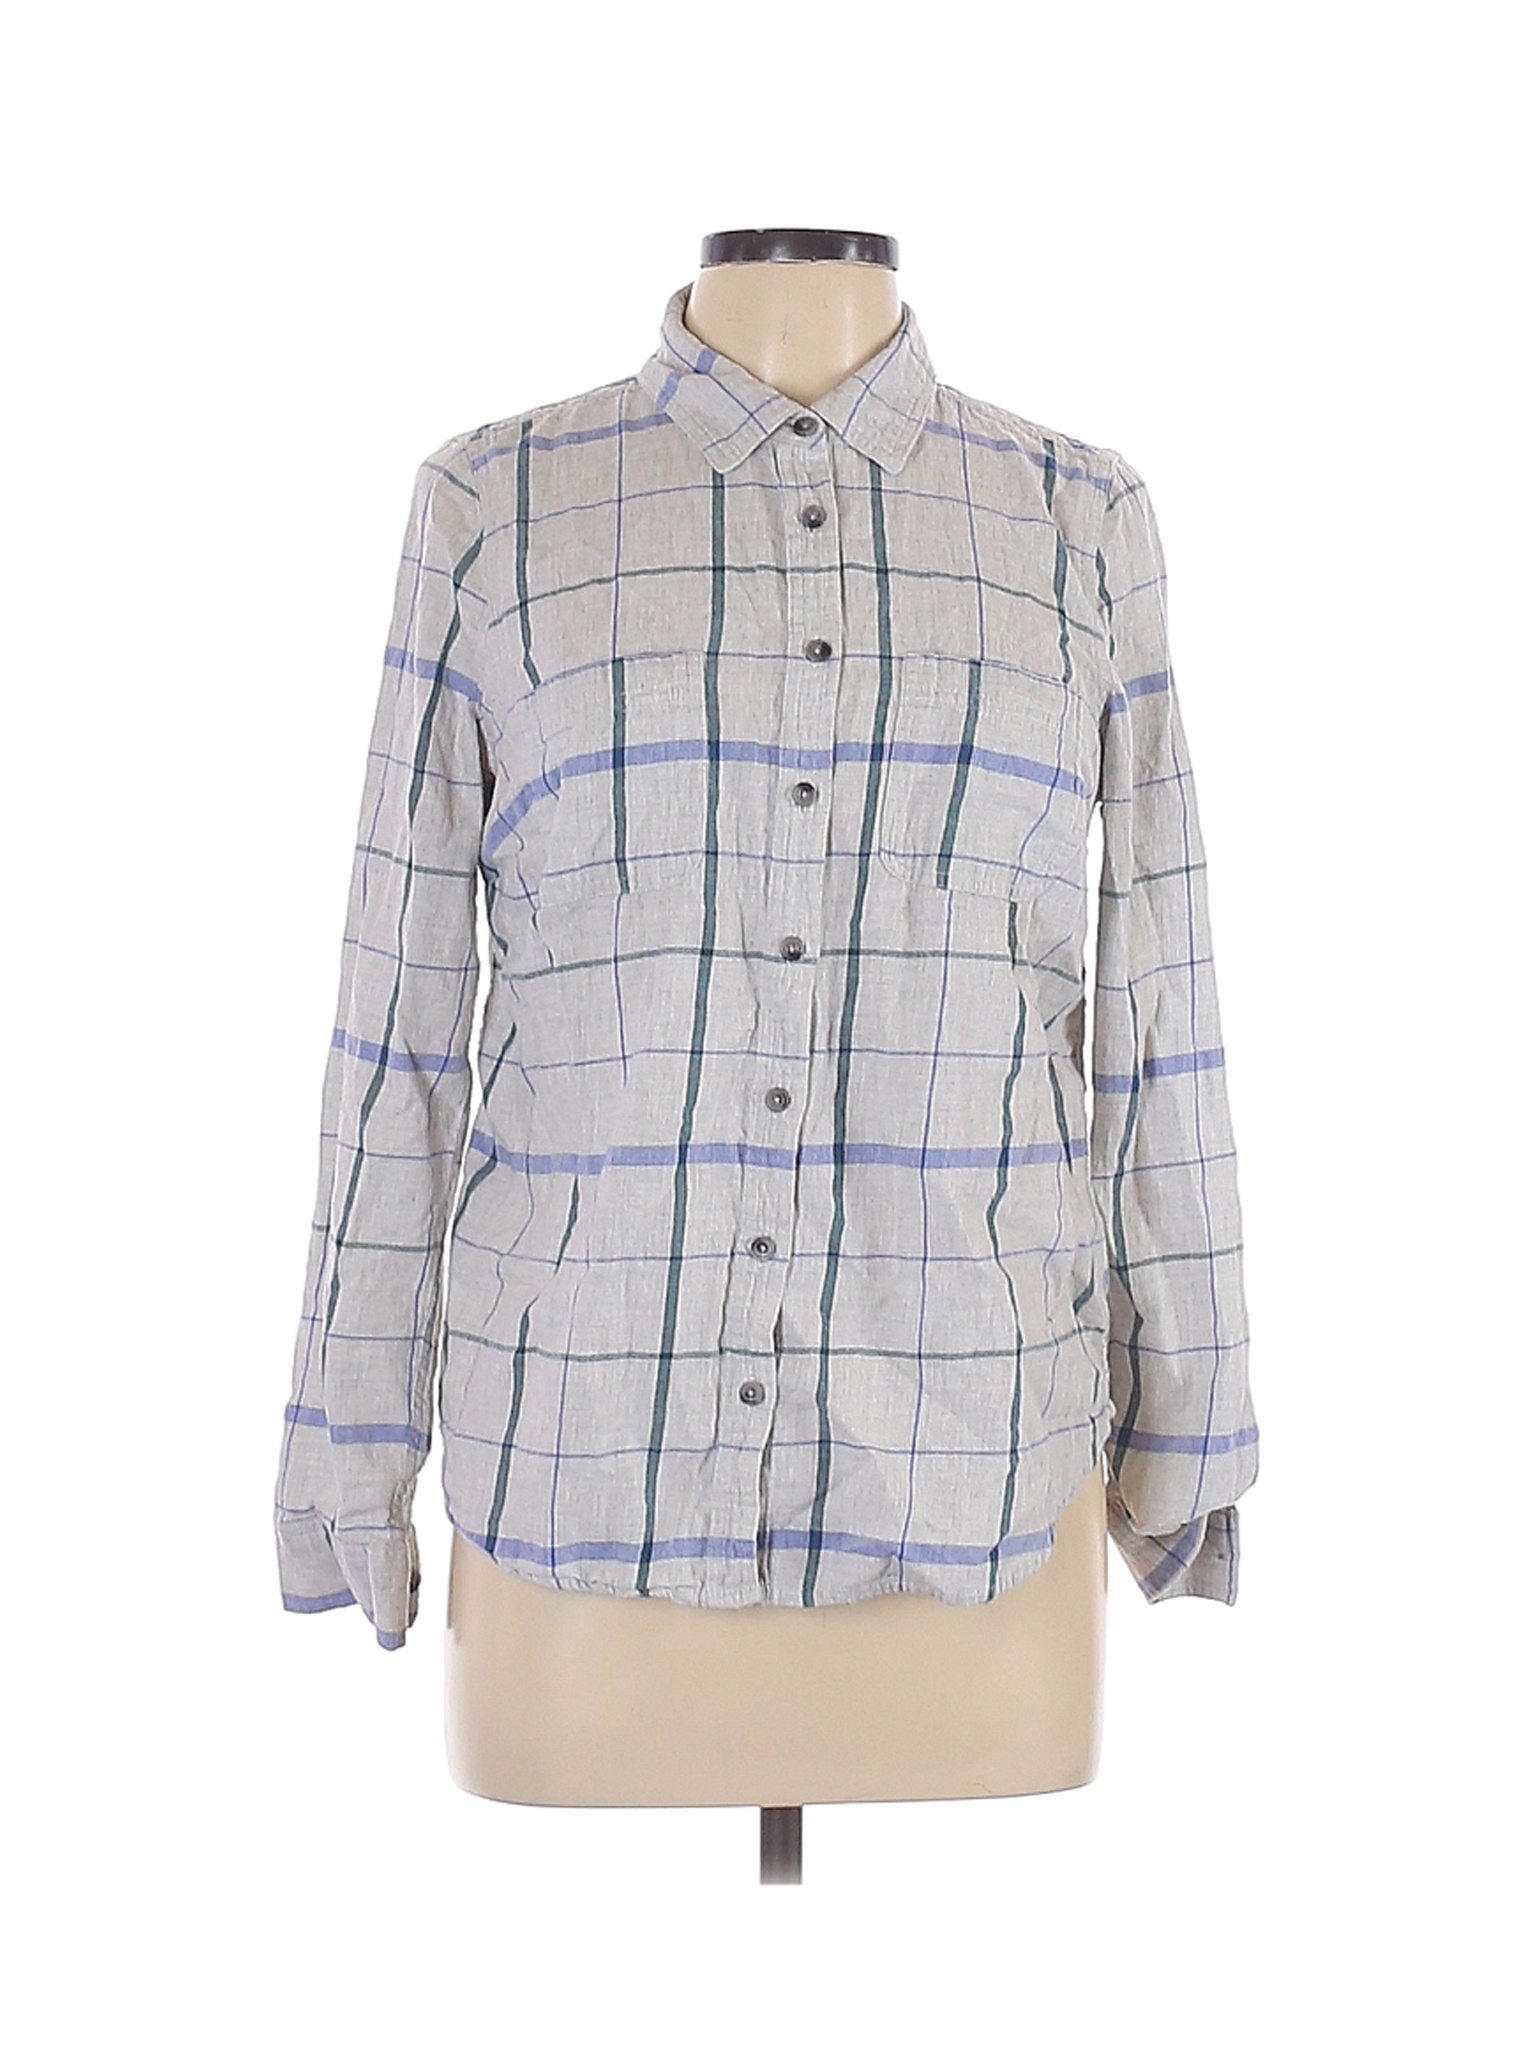 SONOMA life + style Women Gray Long Sleeve Button-Down Shirt L | eBay